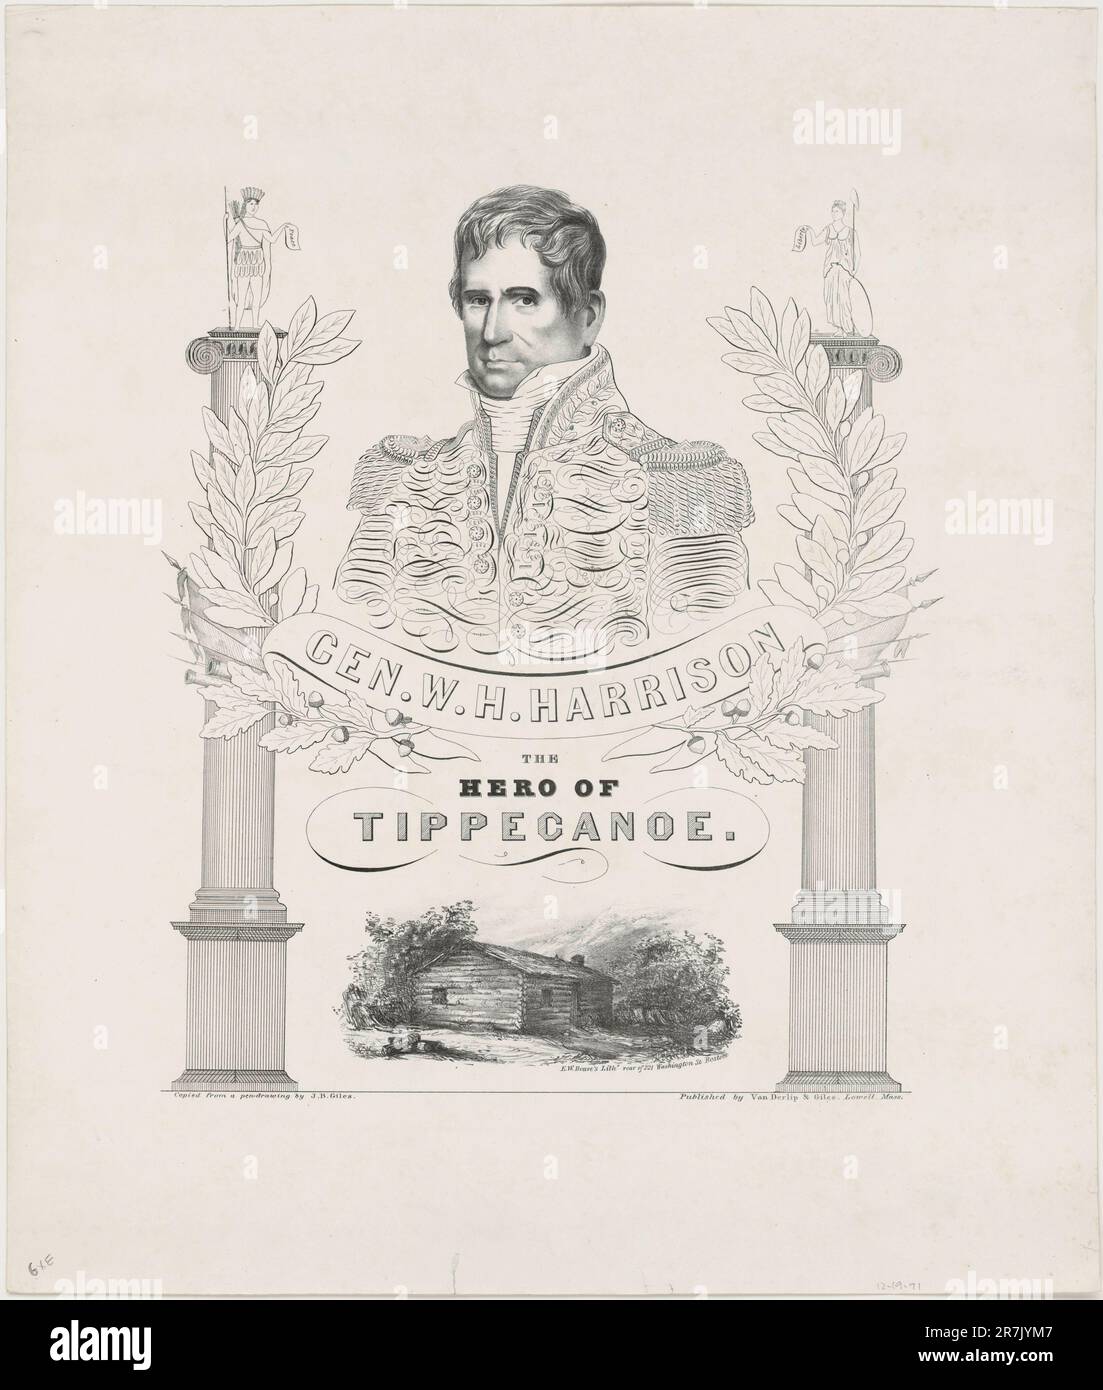 William Henry Harrison c. 1840 Stock Photo